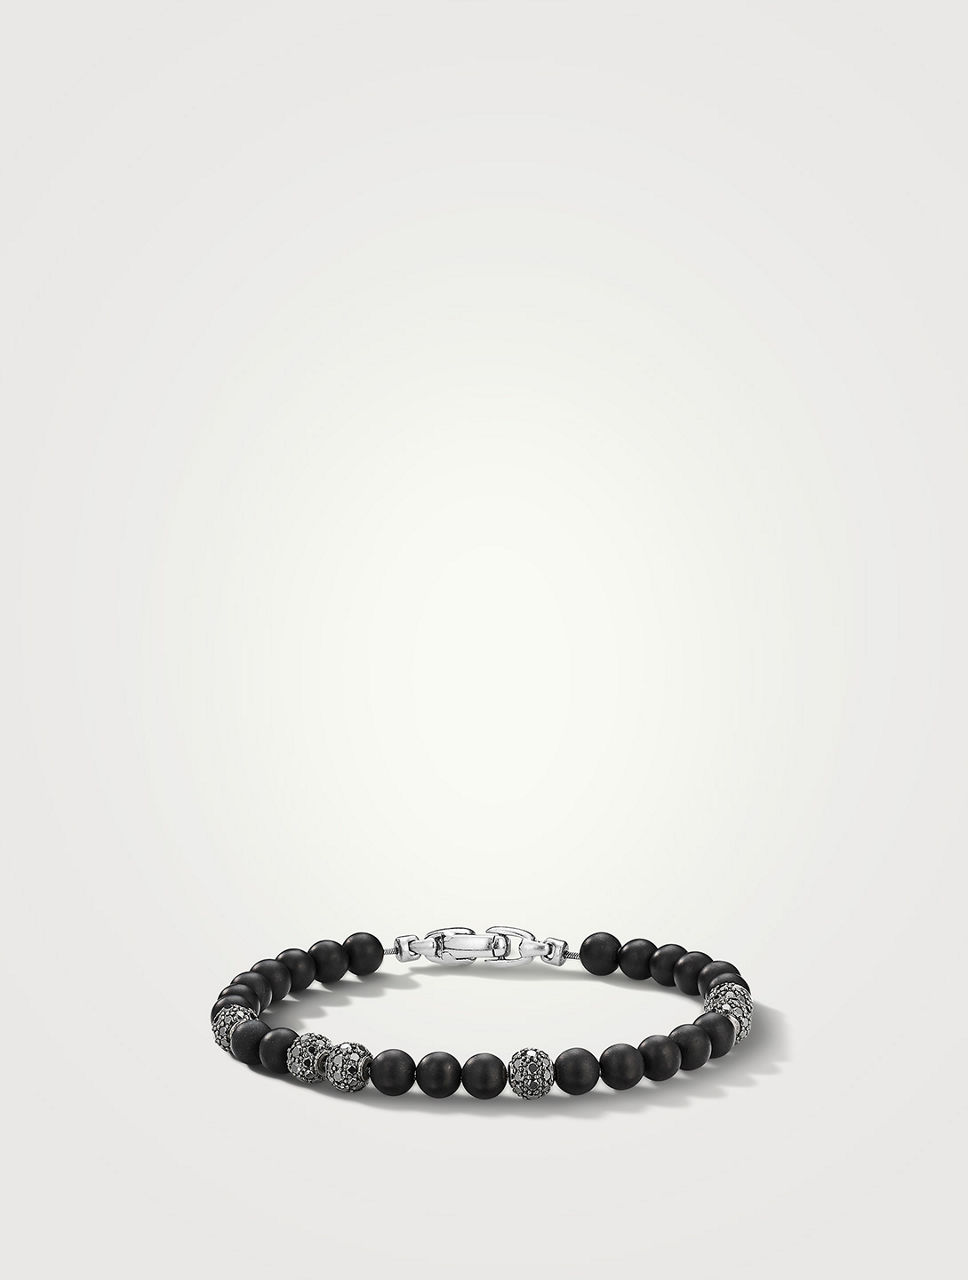 Spiritual Beads Bracelet Sterling Silver With Black Onyx And Pavé Diamonds